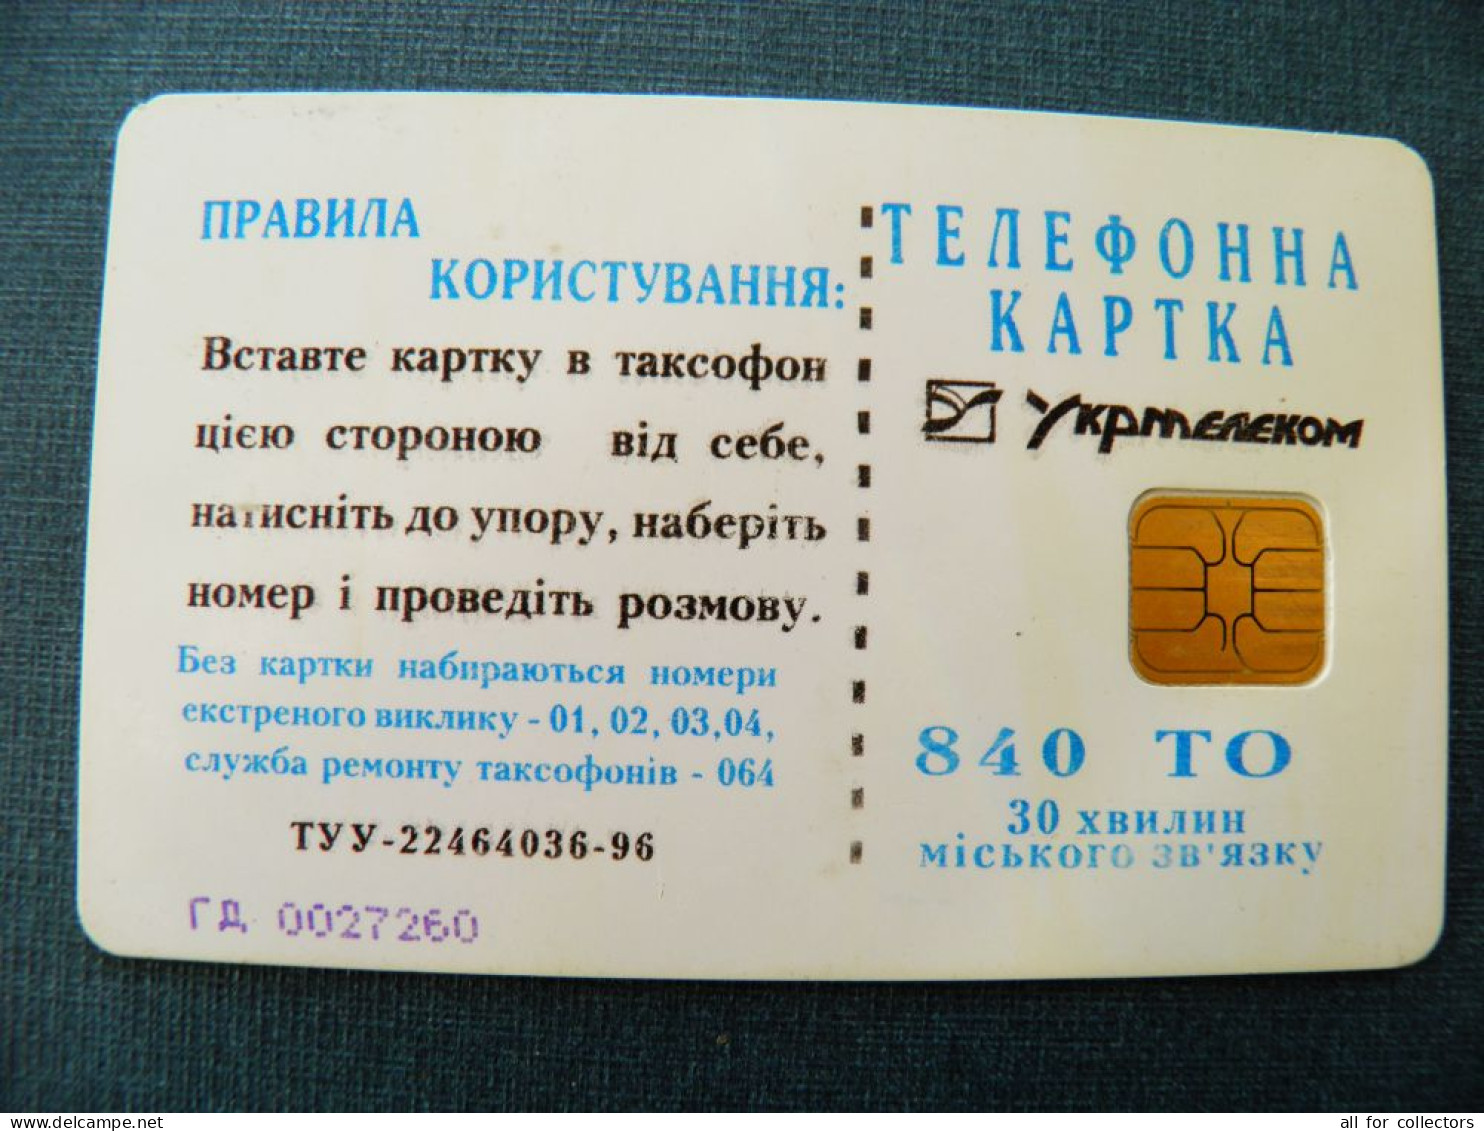 Ukraine Phonecard Chip Plant Berries Grapes Fruits 840 Units K245 10/97 30,000ex. Prefix Nr. GD (in Cyrillic) - Ukraine